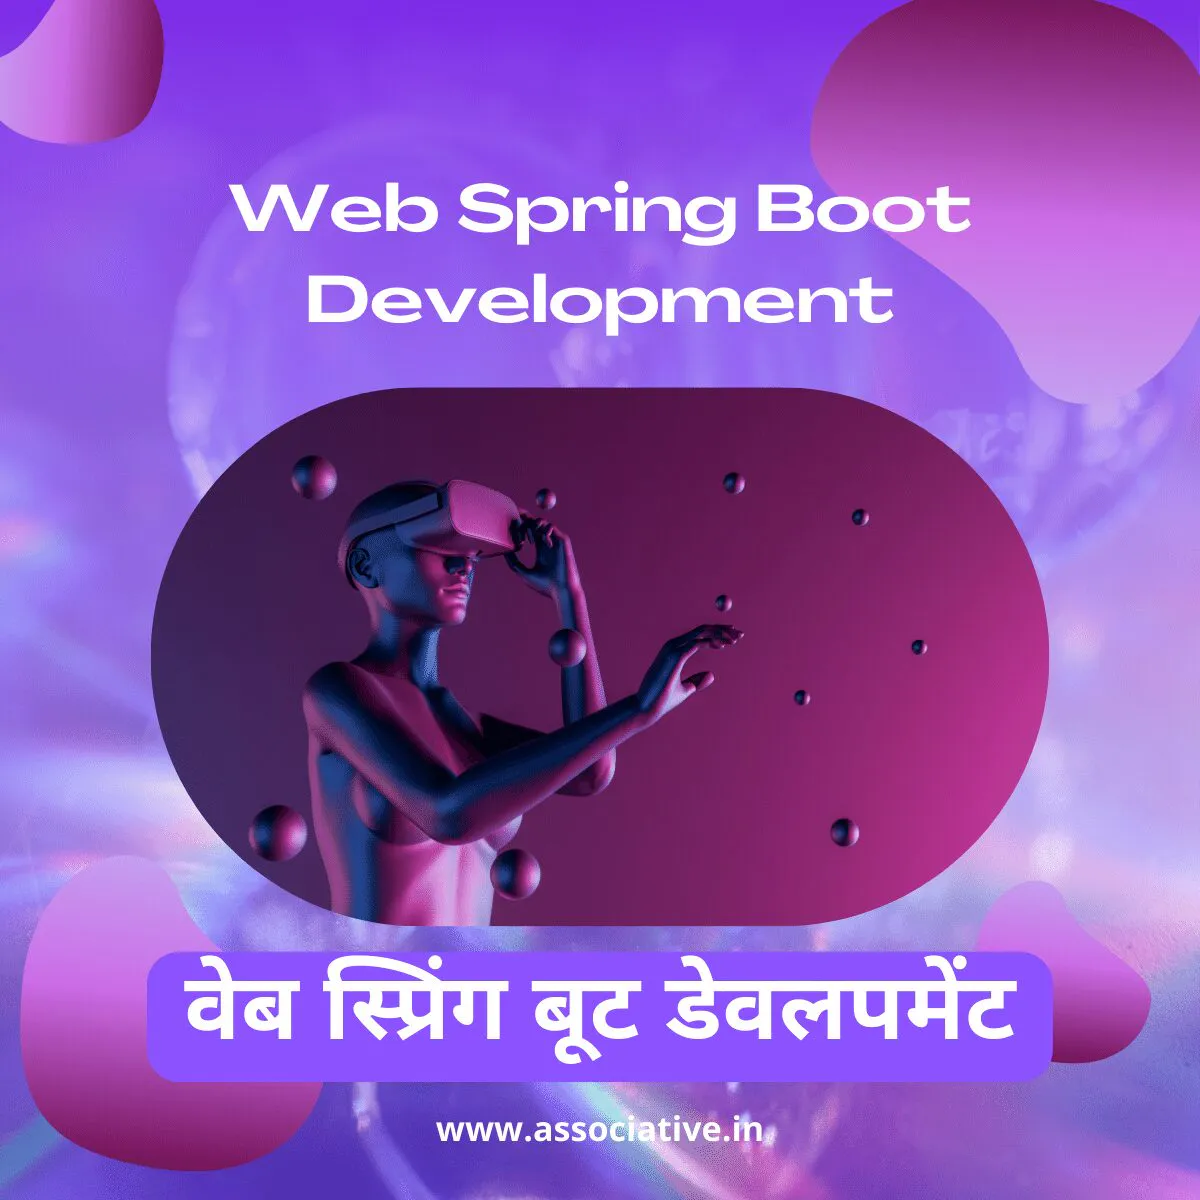 Web Spring Boot Development